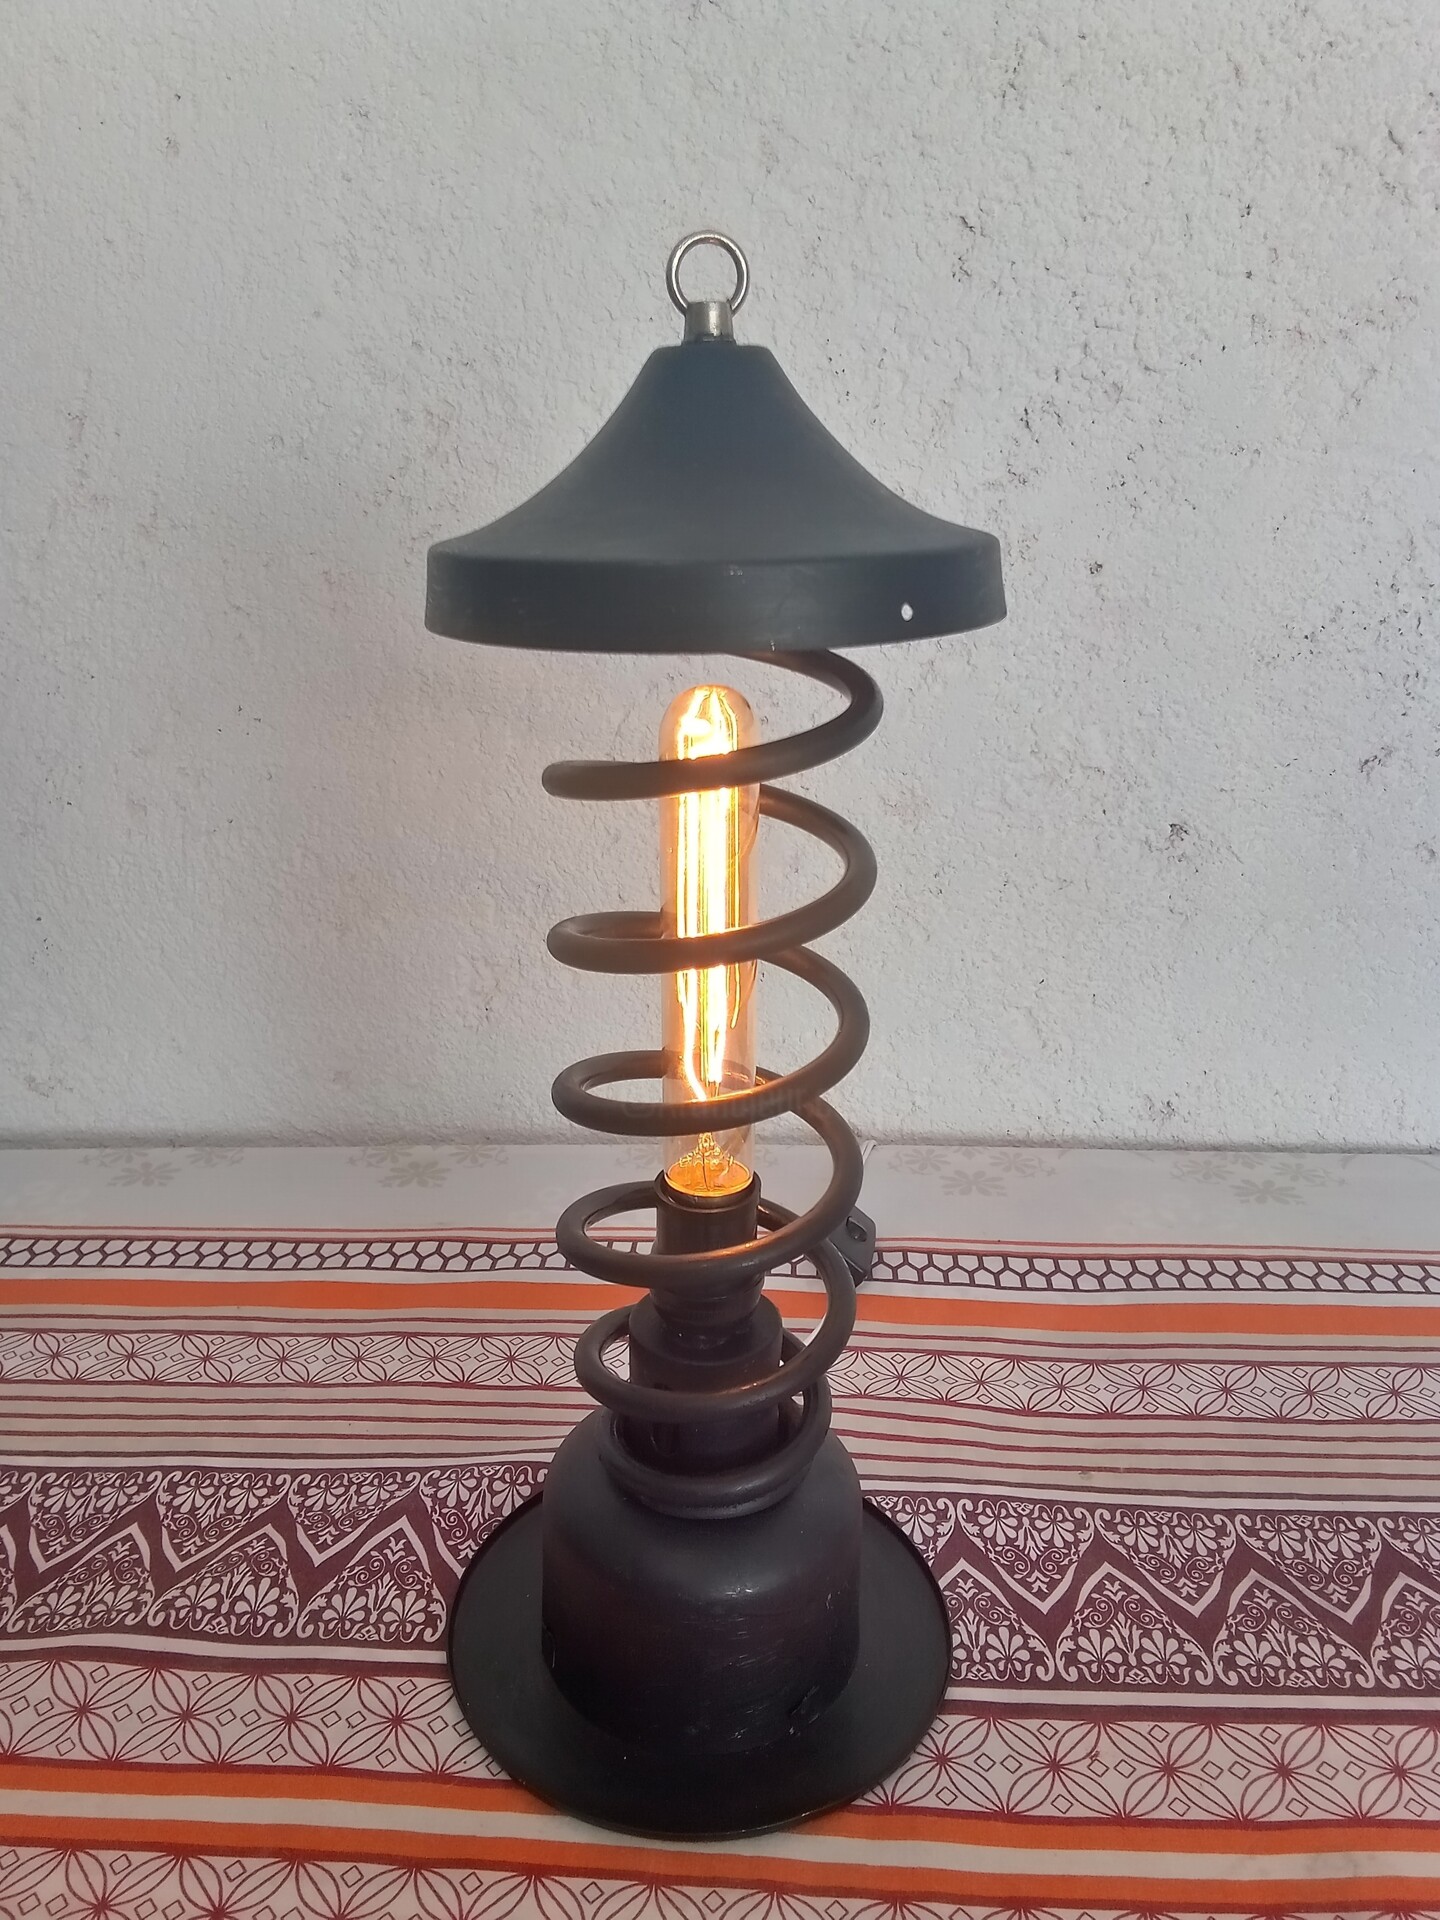 Conflict snijder lekkage Spin-Lamp, Design by Calavera Estudio Dgo Mx | Artmajeur